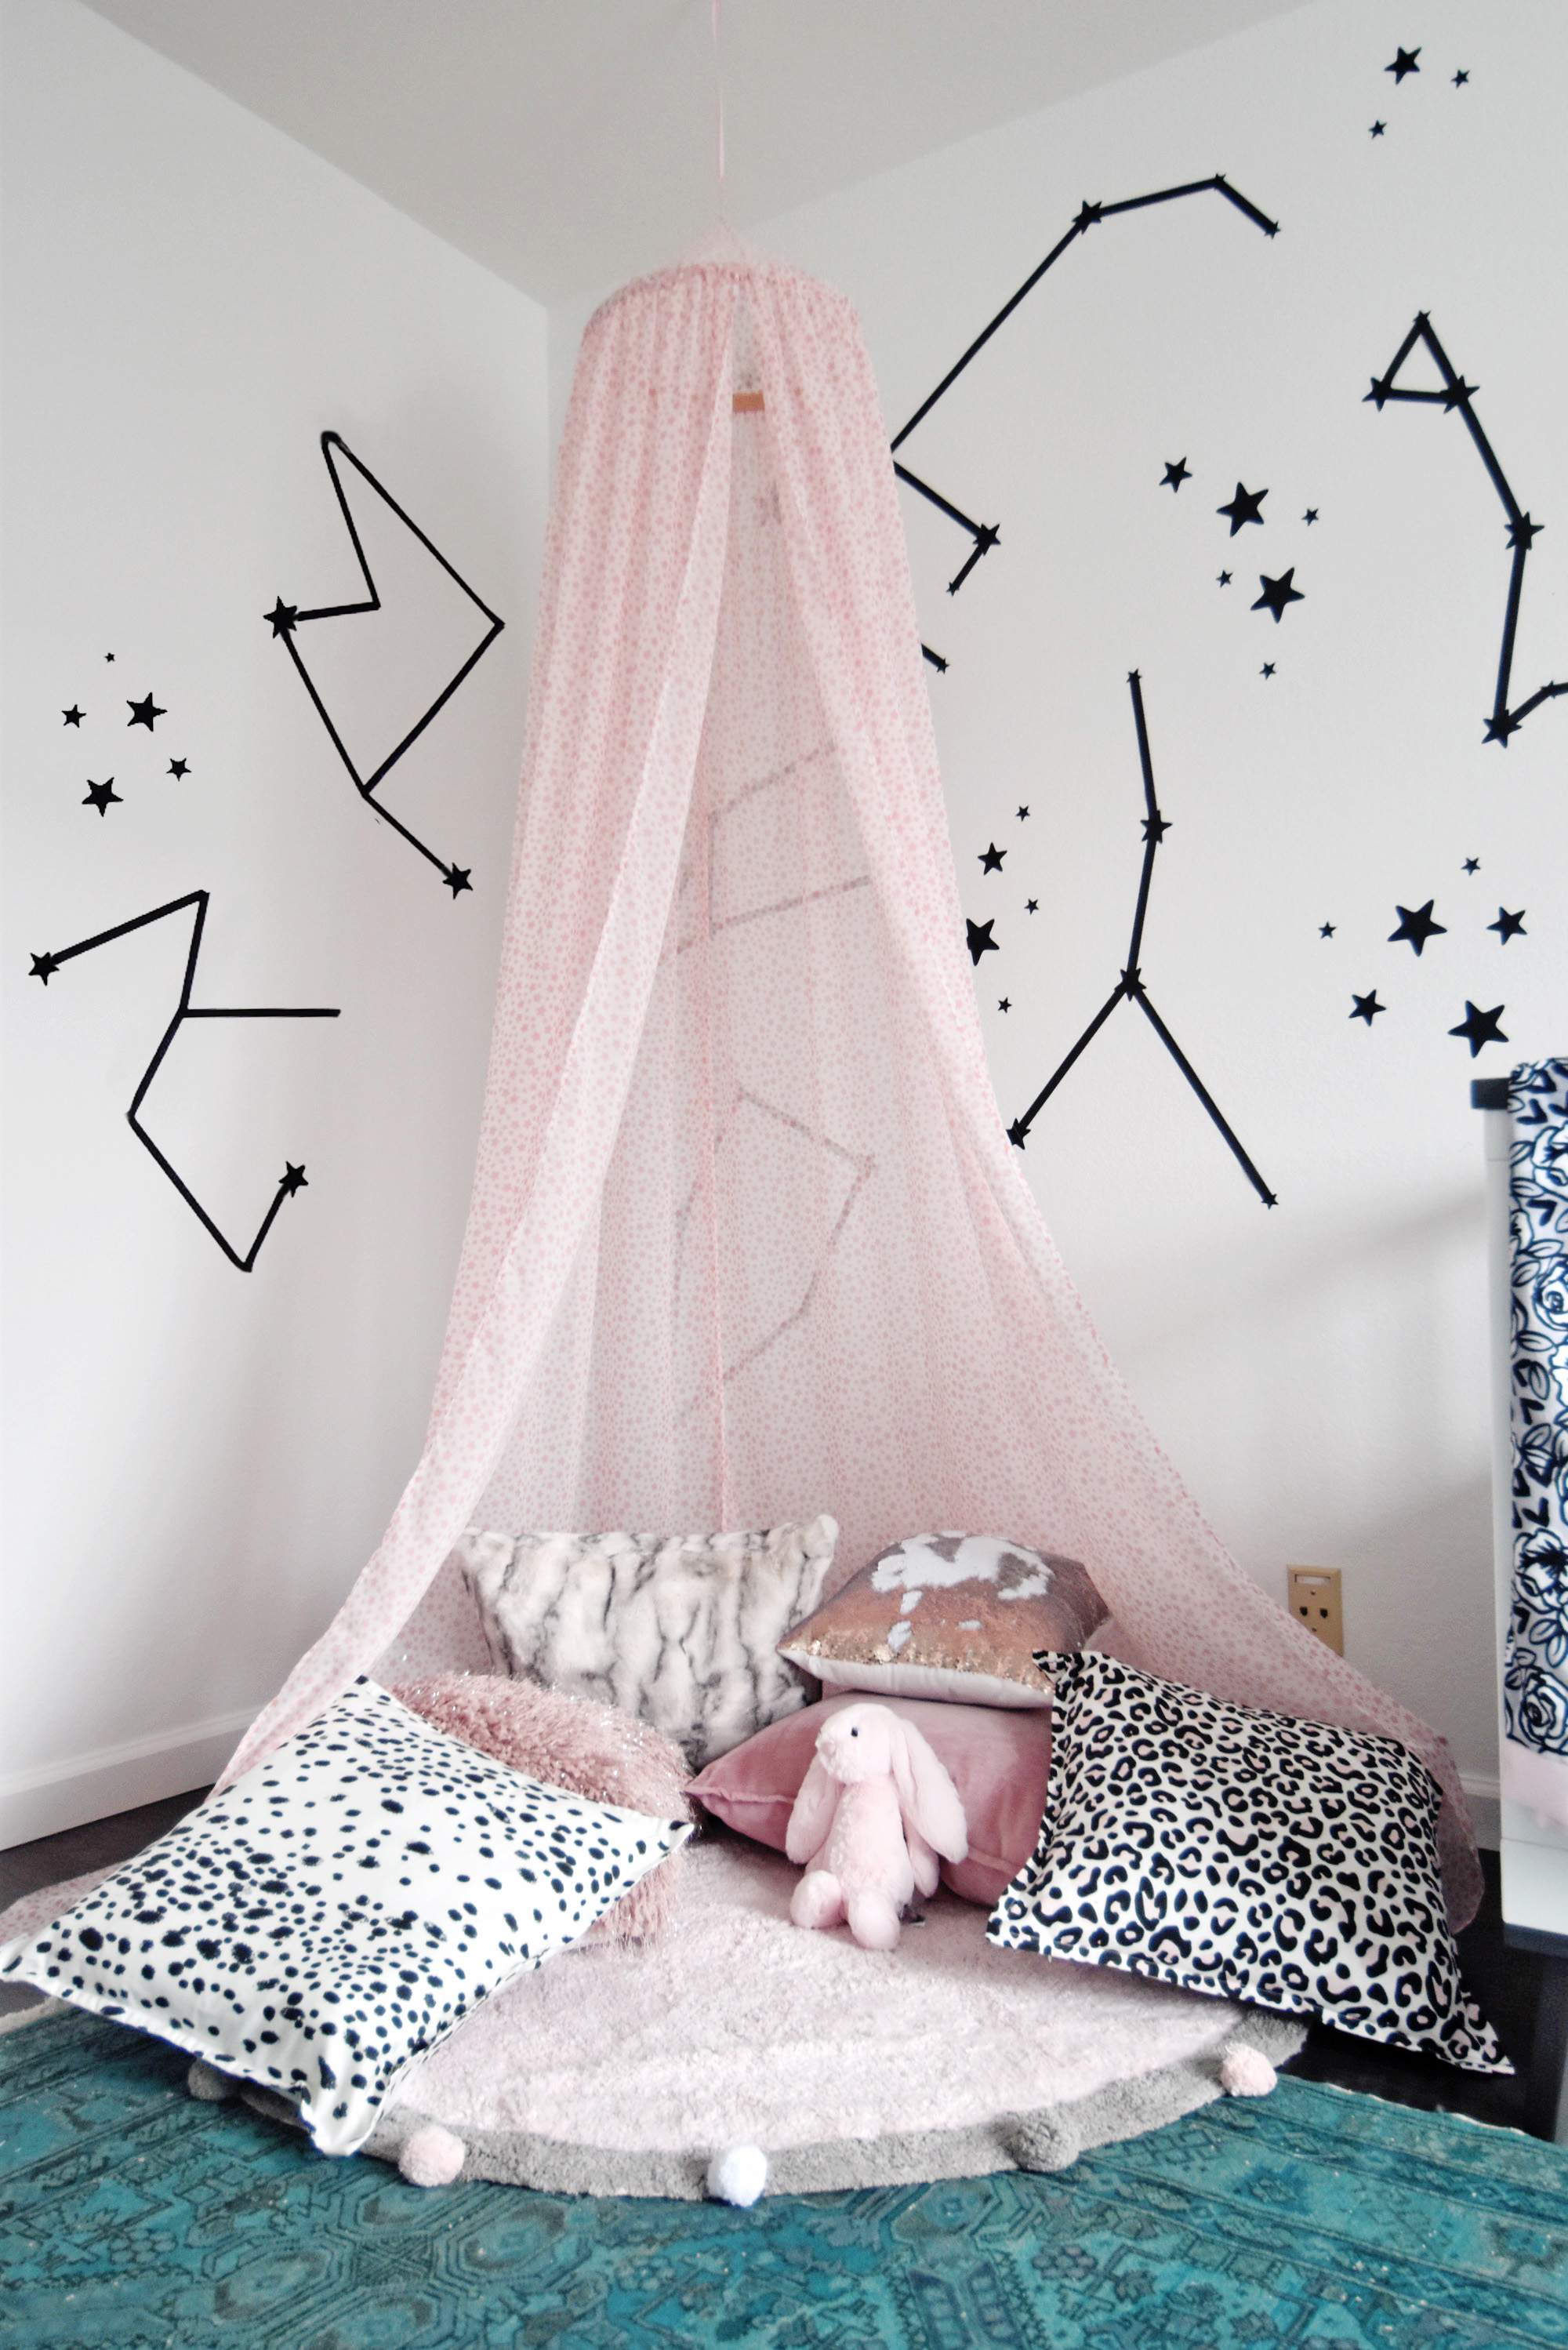 Sleep Under the Stars with a DIY Canopy | Spoonflower Blog 